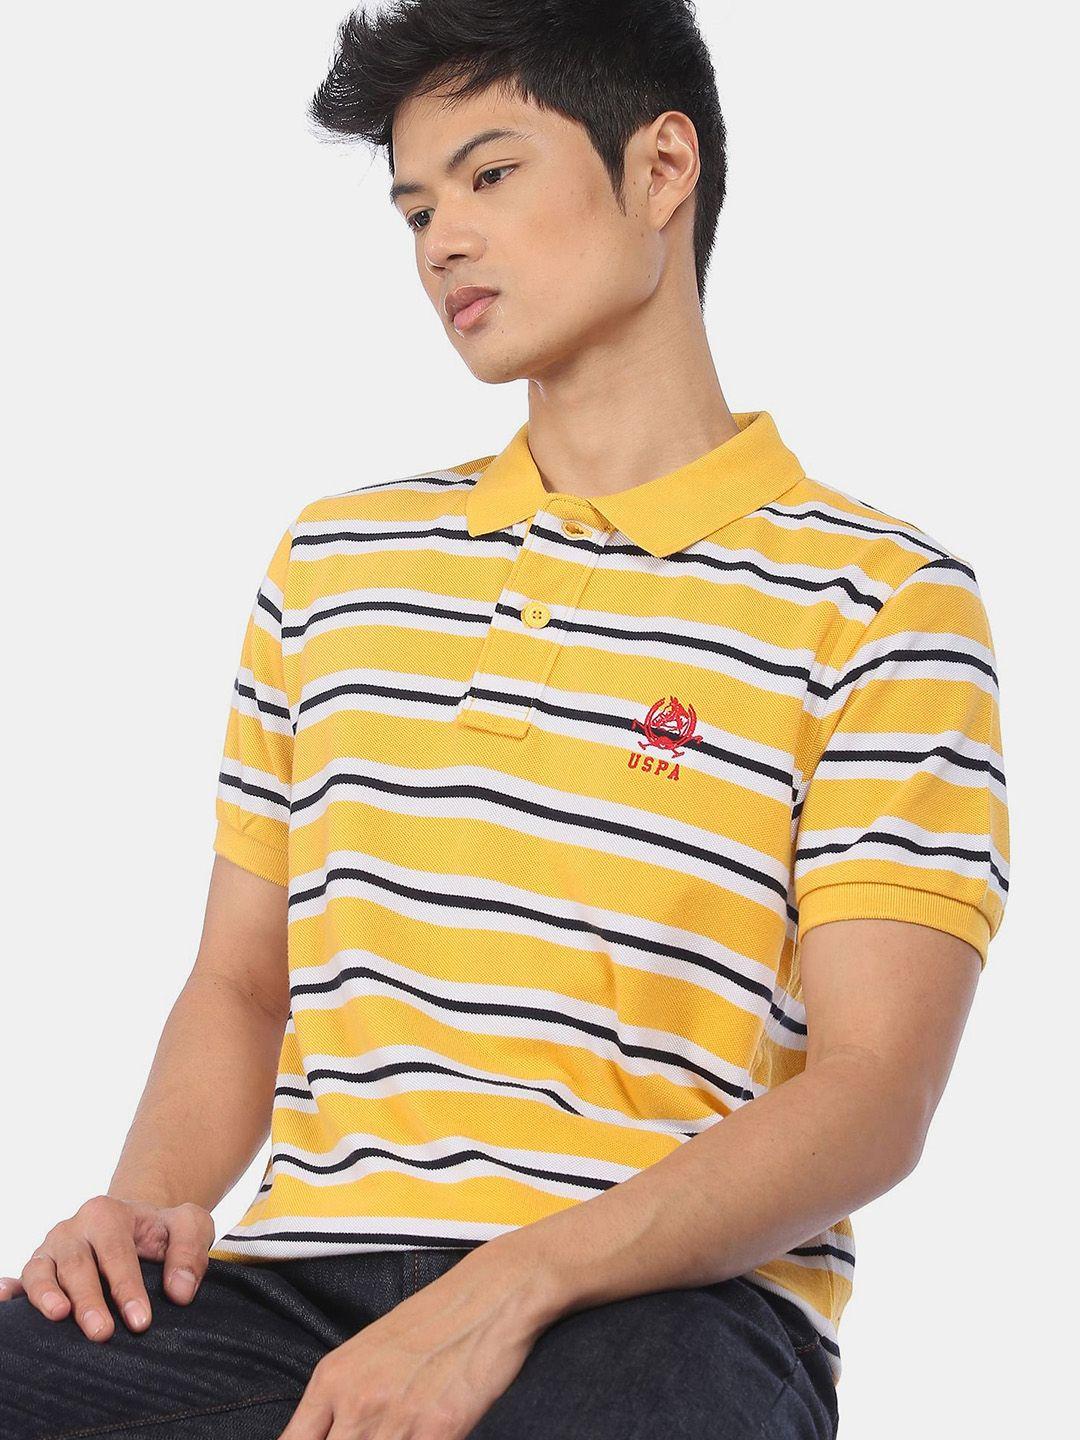 u s polo assn men mustard yellow & white striped polo collar pure cotton slim fit t-shirt